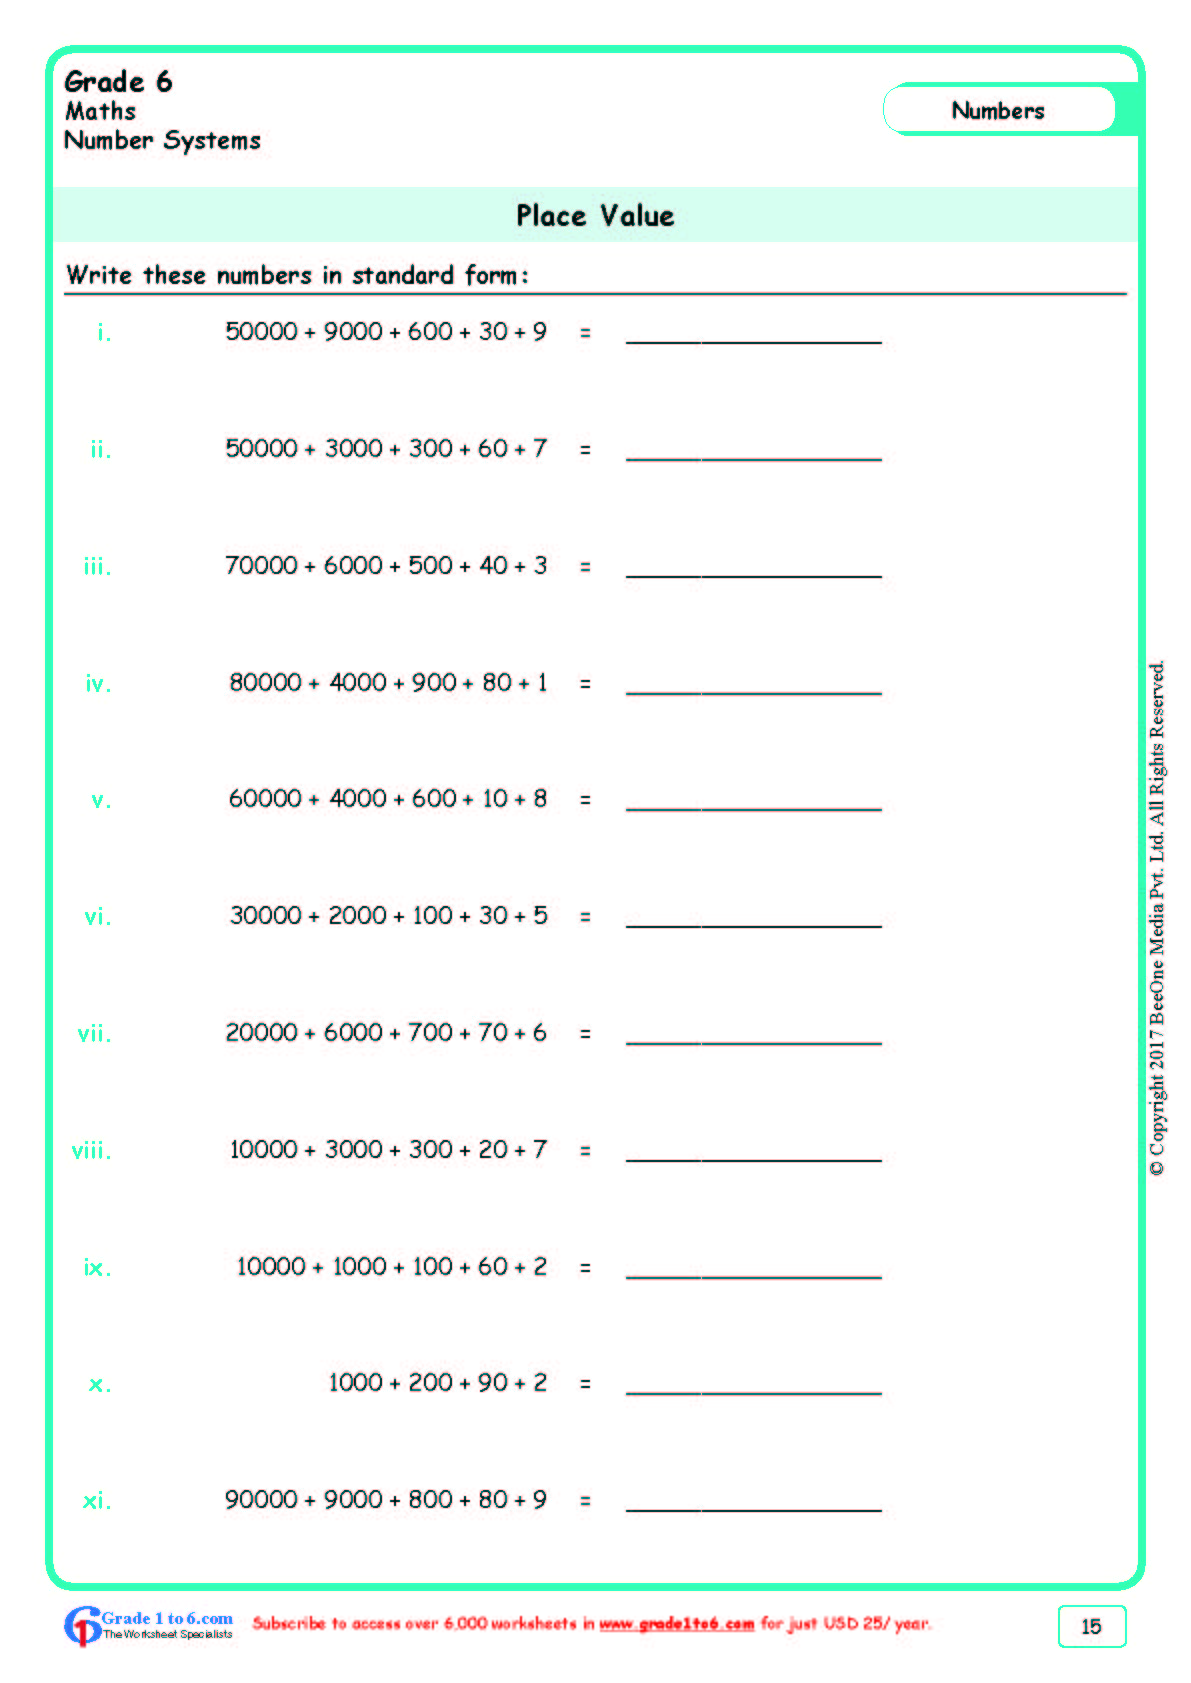 Grade 6|Place Value Worksheets|www.grade1to6.com